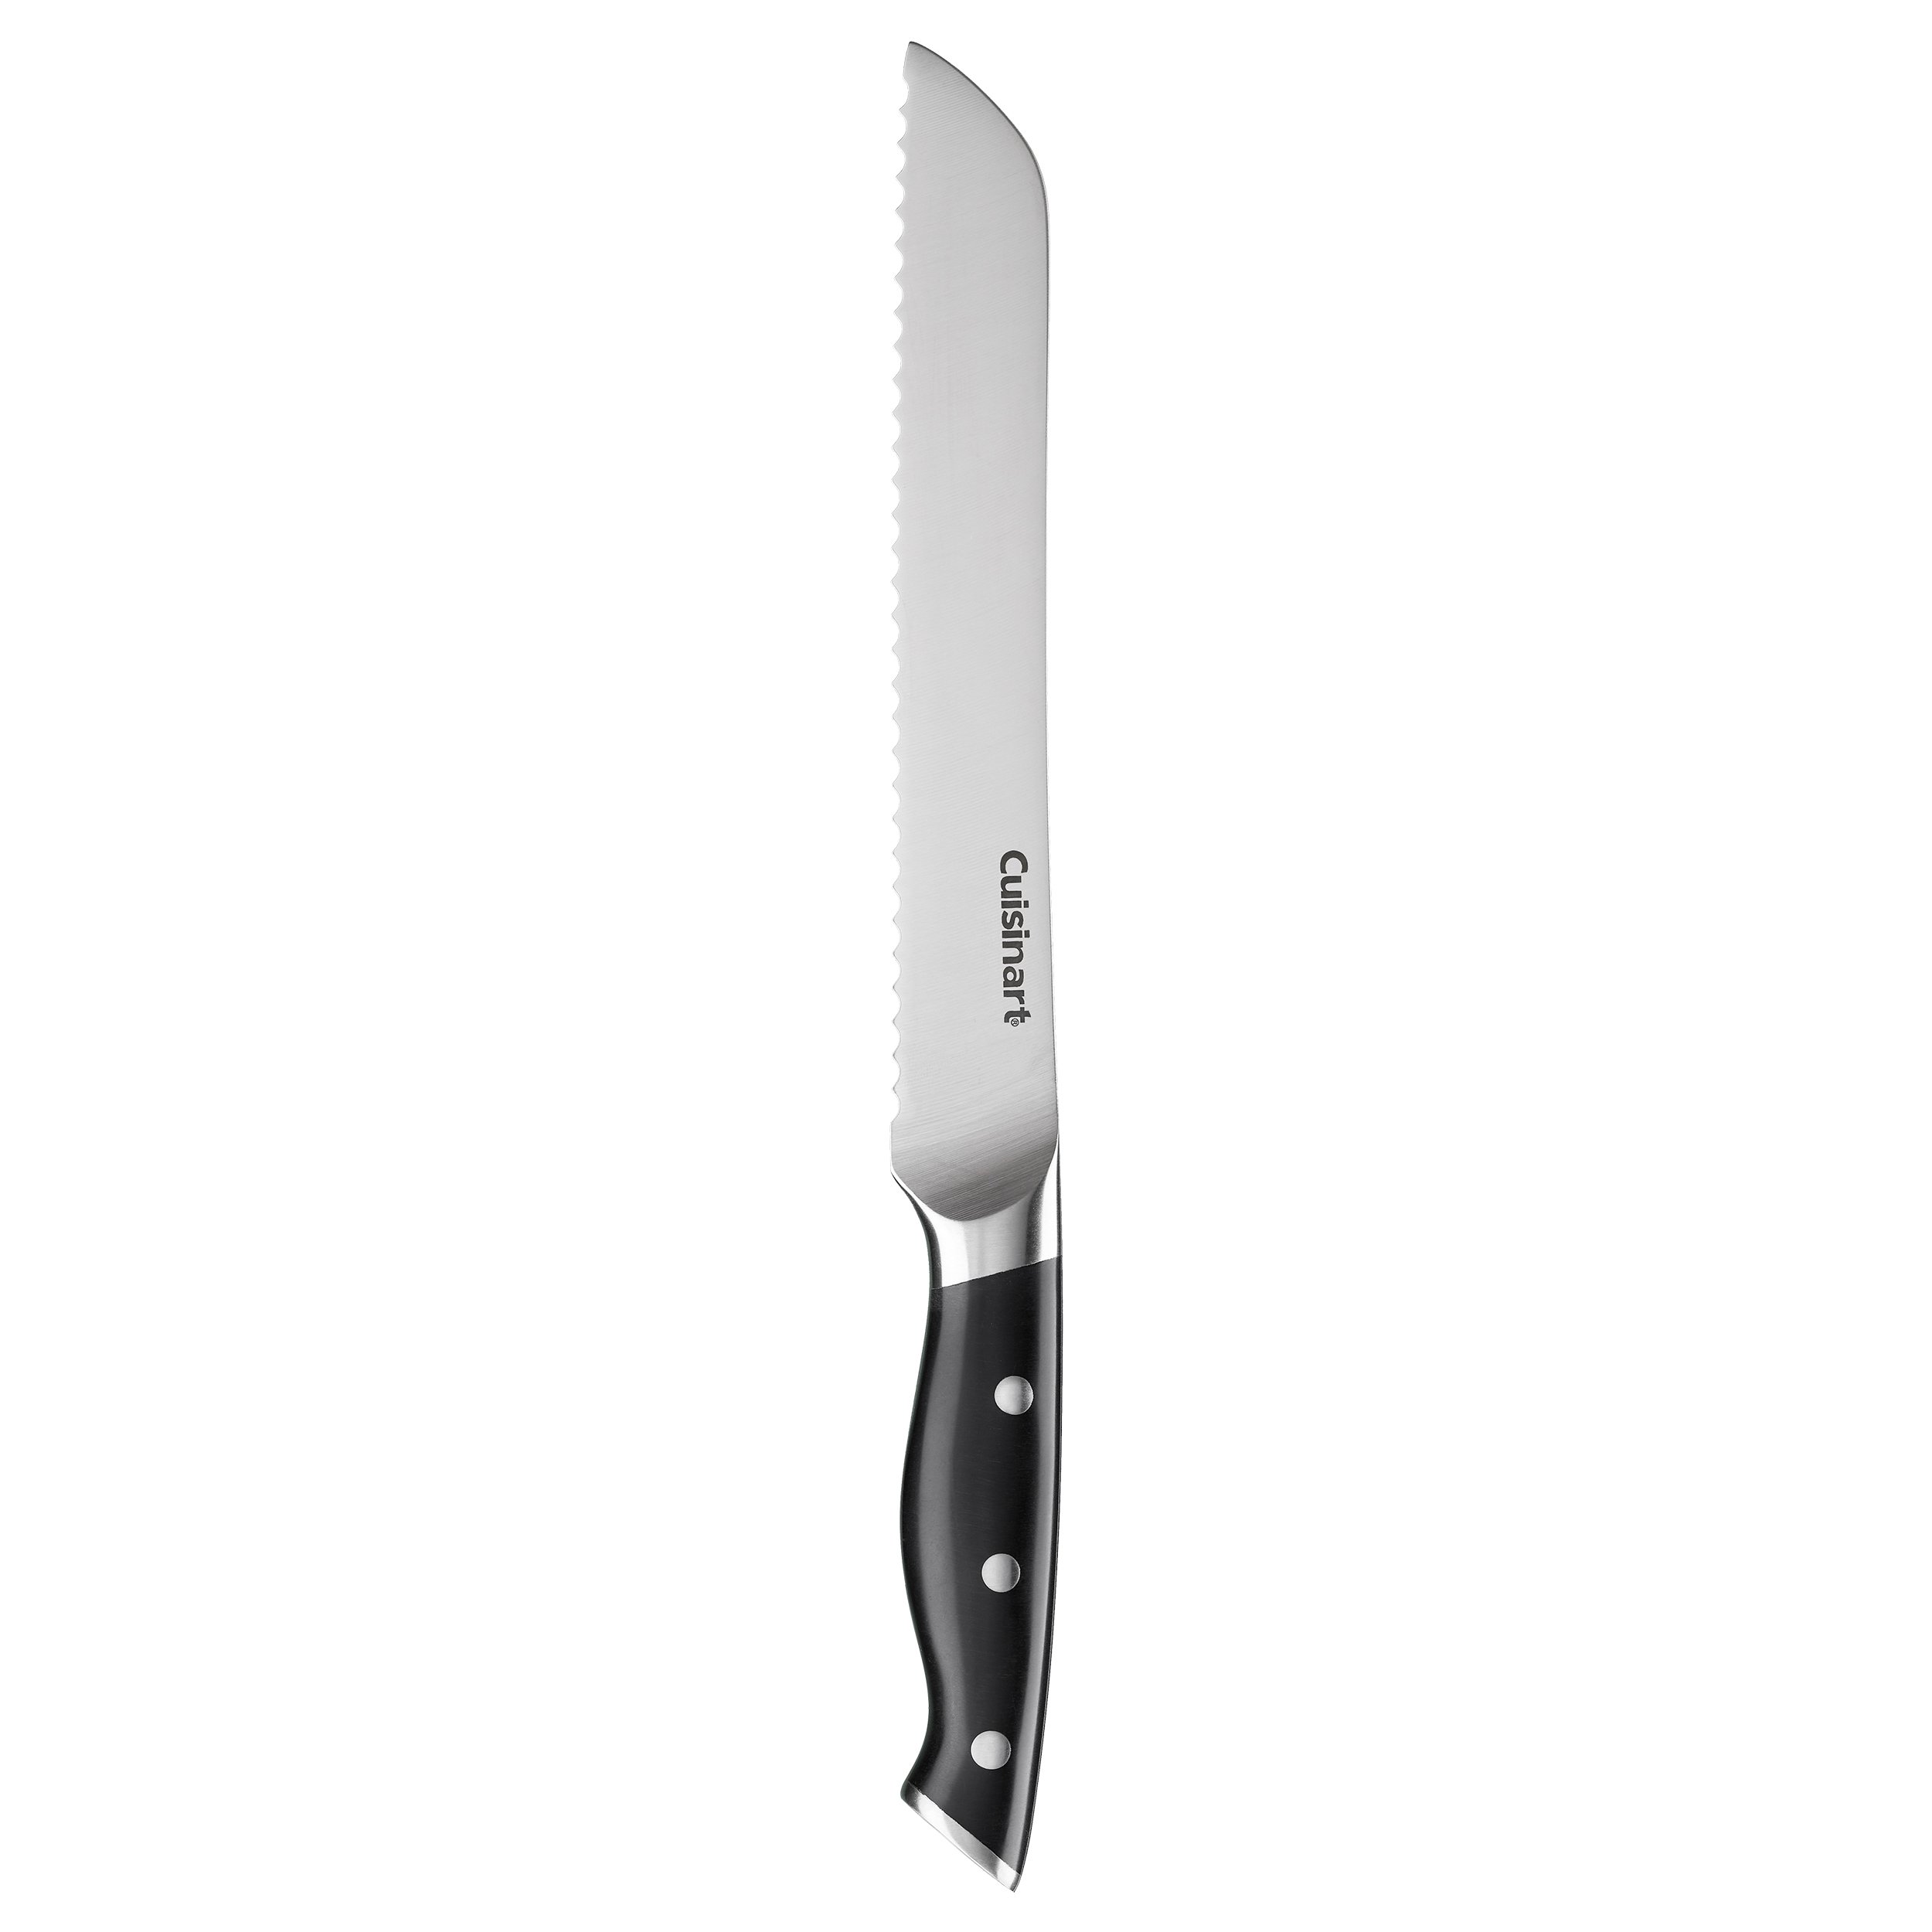 Cuisinart Triple Rivet Collection Nitrogen Infused Kitchen Knives